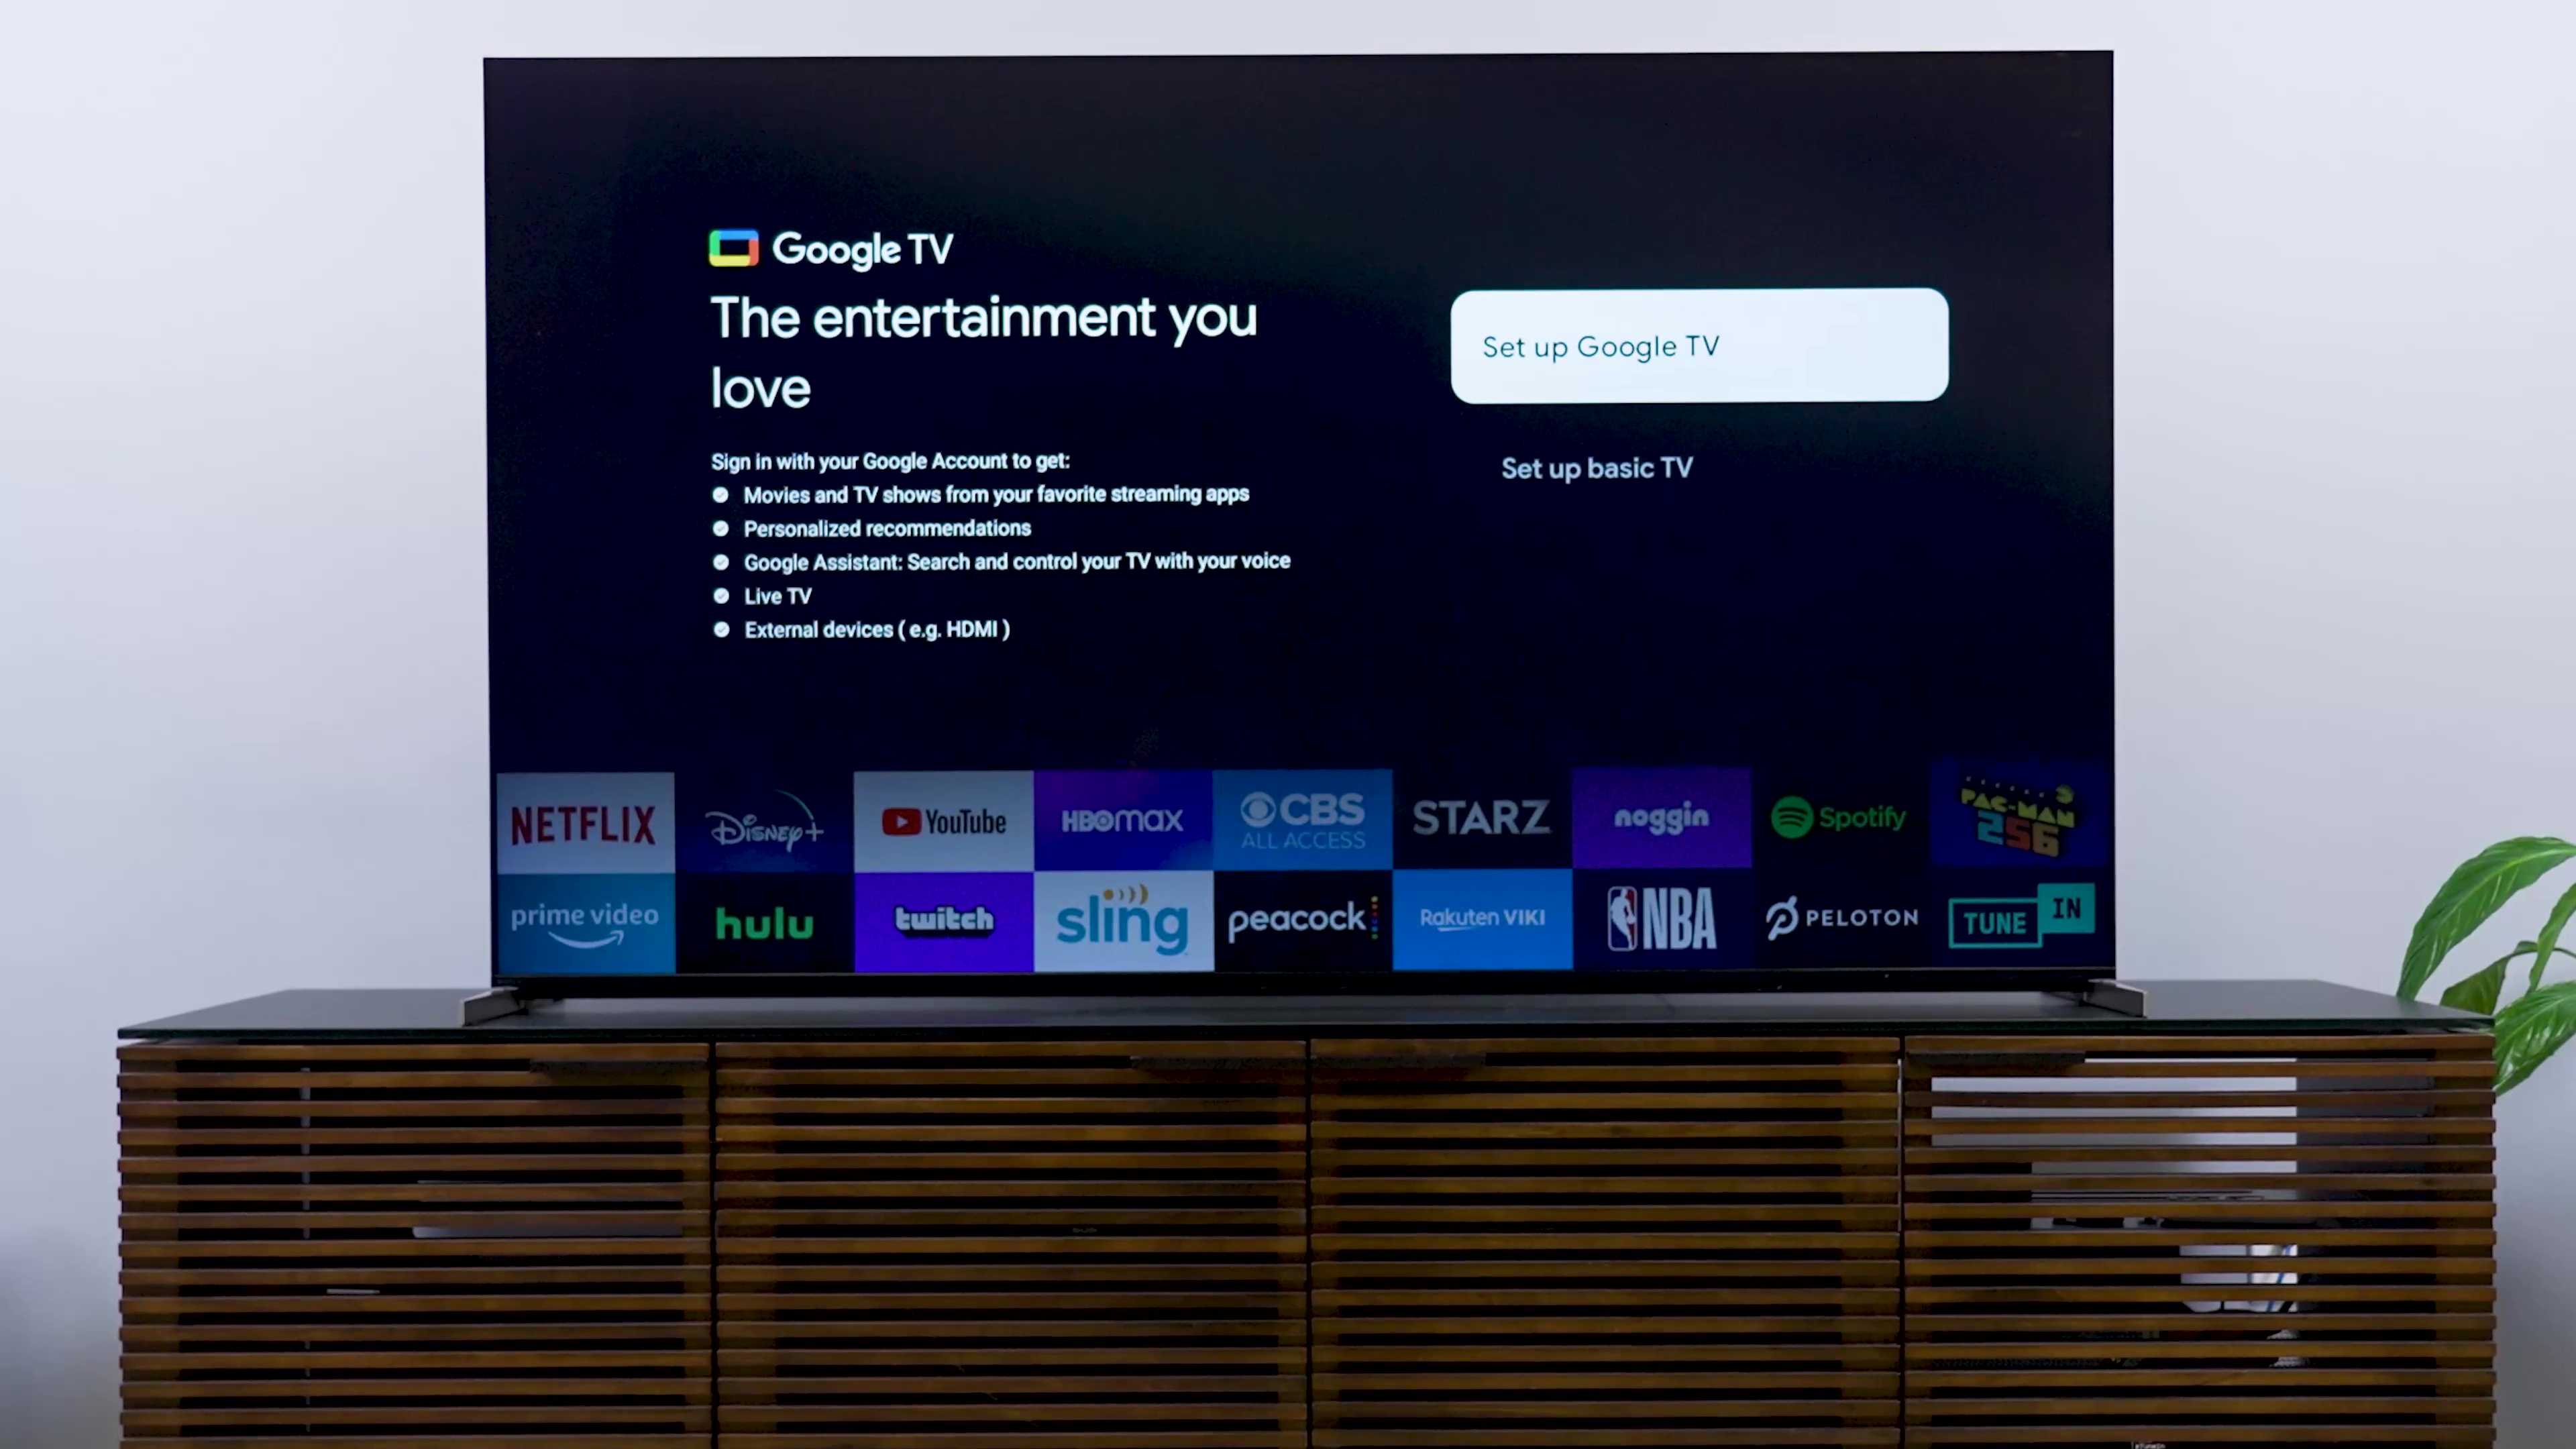 A interface do Google TV em uma TV Mini-LED Sony Bravia X93L.